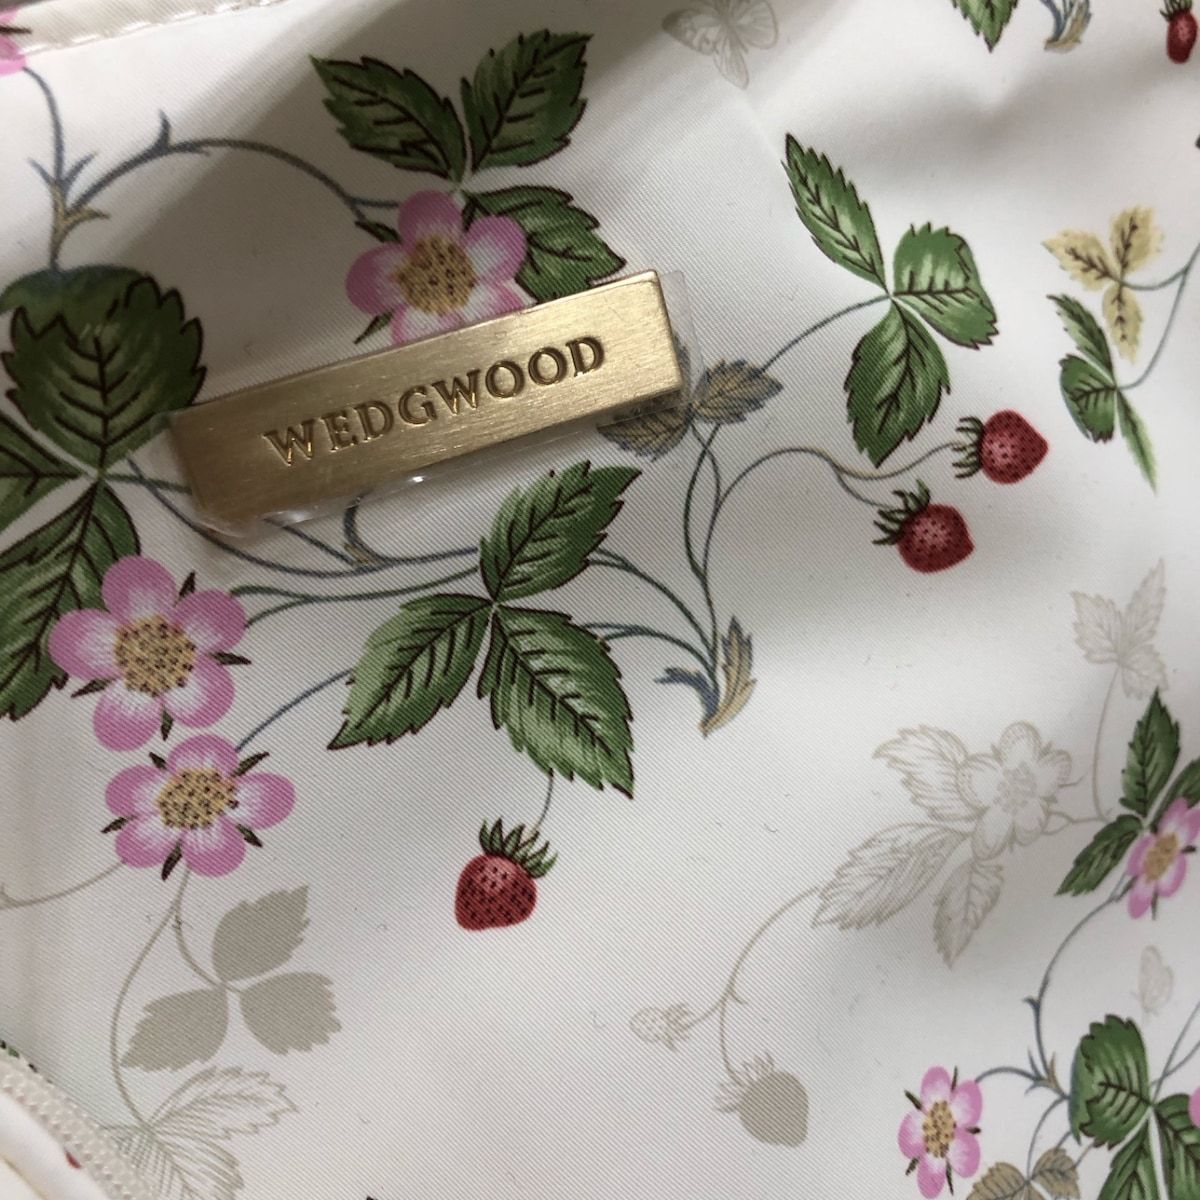 WEDG WOOD(ウェッジウッド) ハンドバッグ美品 ワイルドストロベリー アイボリー×グリーン×マルチ イチゴ ナイロン